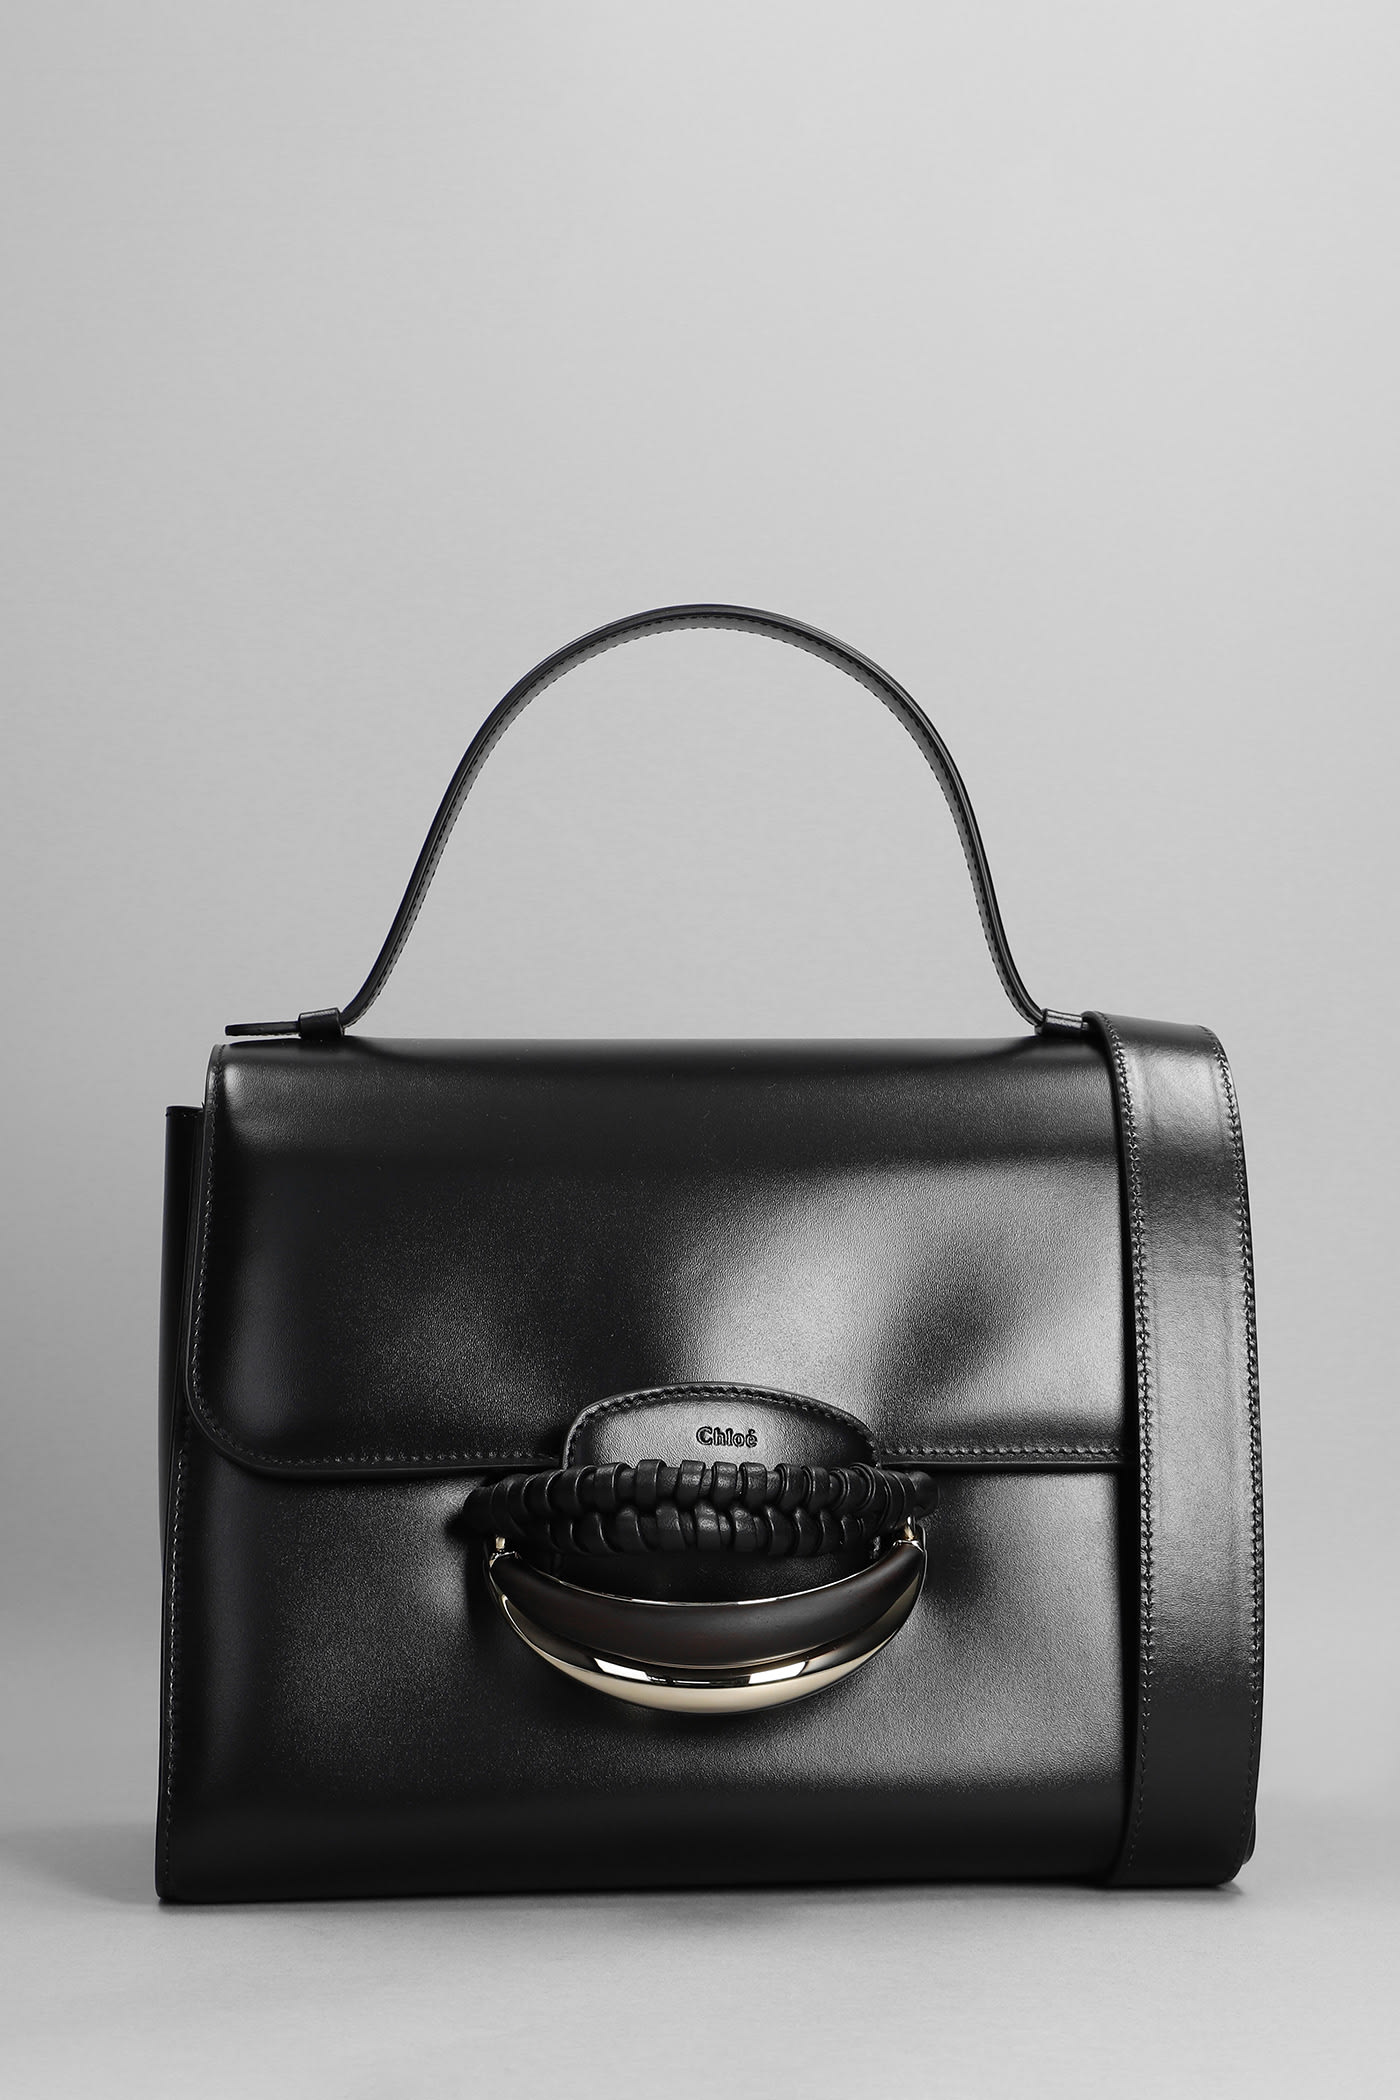 Chloé Kattie Hand Bag In Black Leather